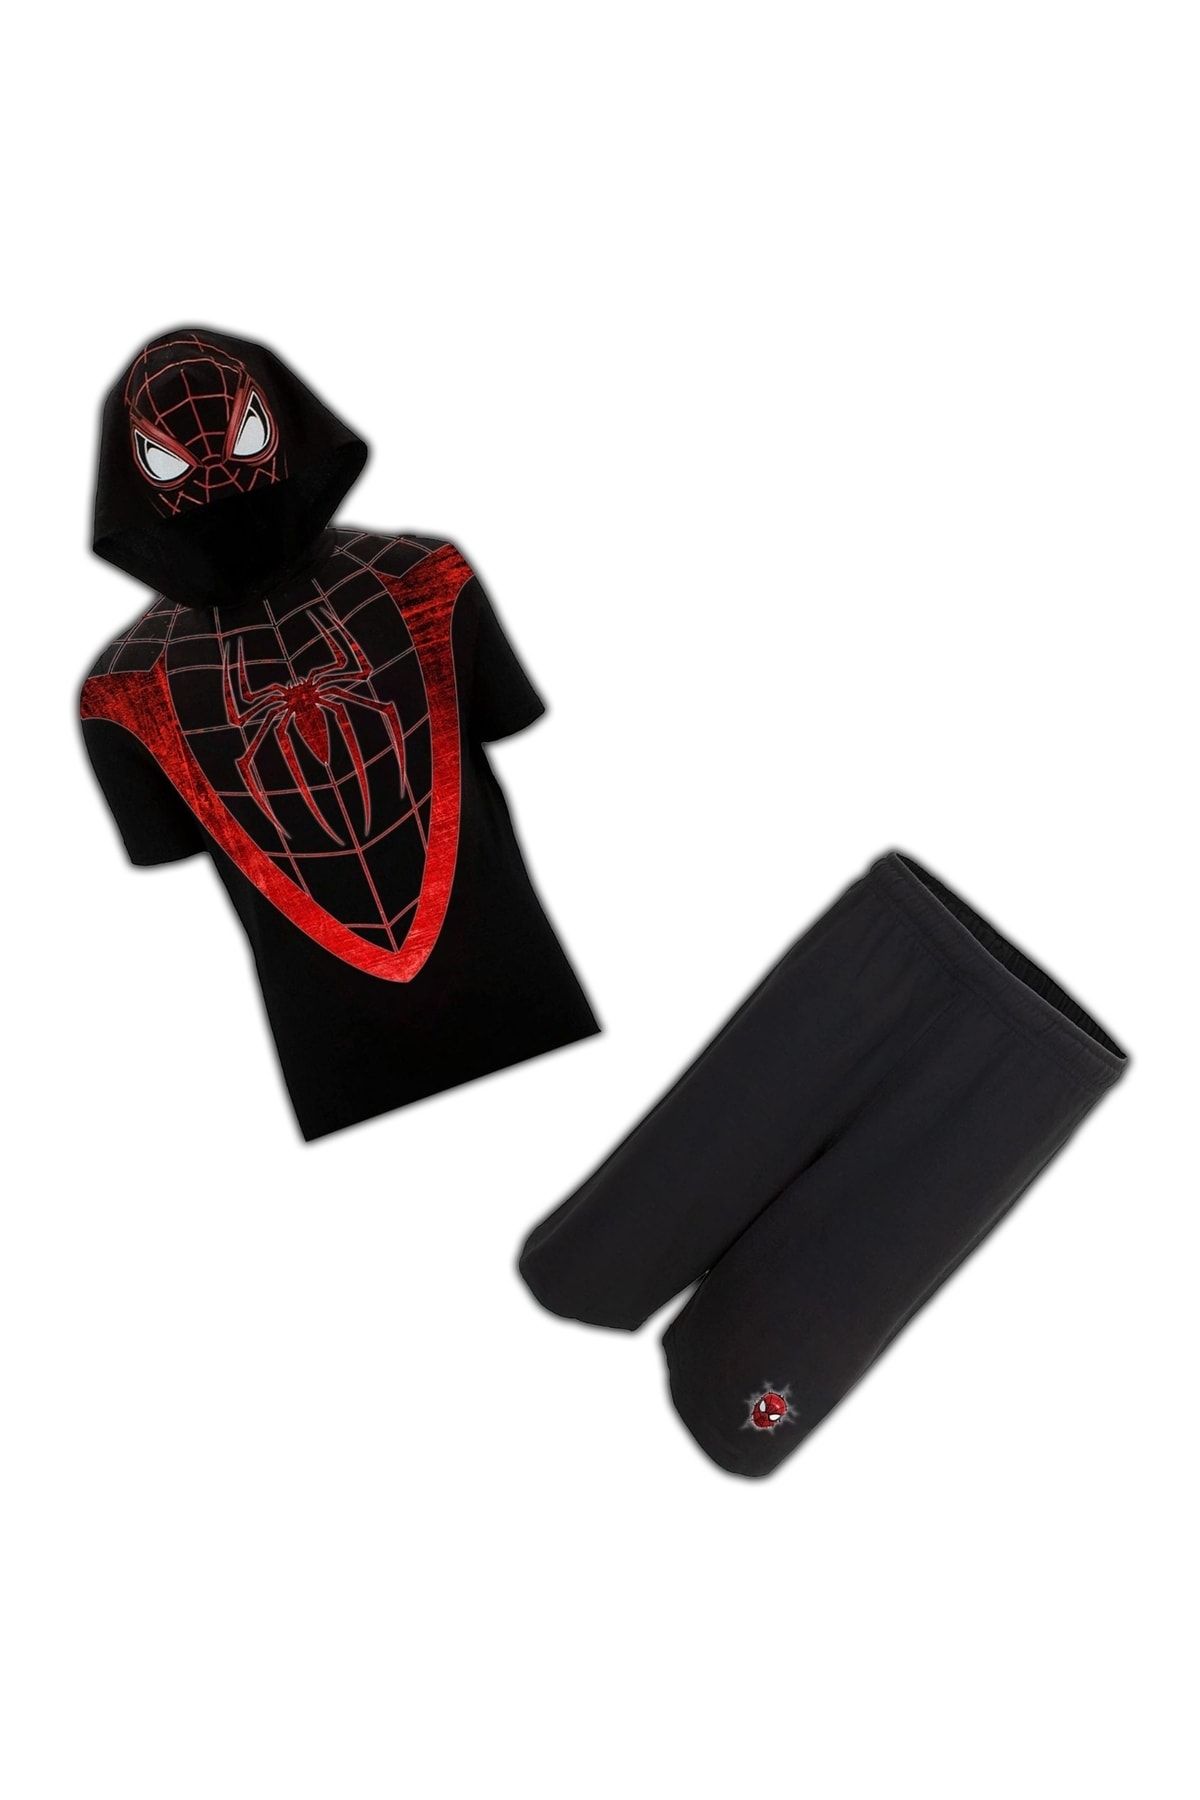 Spiderman Örümcek Adam Kostüm Kısa Kollu Tshirt Kapşonlu Ve Şortlu Takım Kostüm